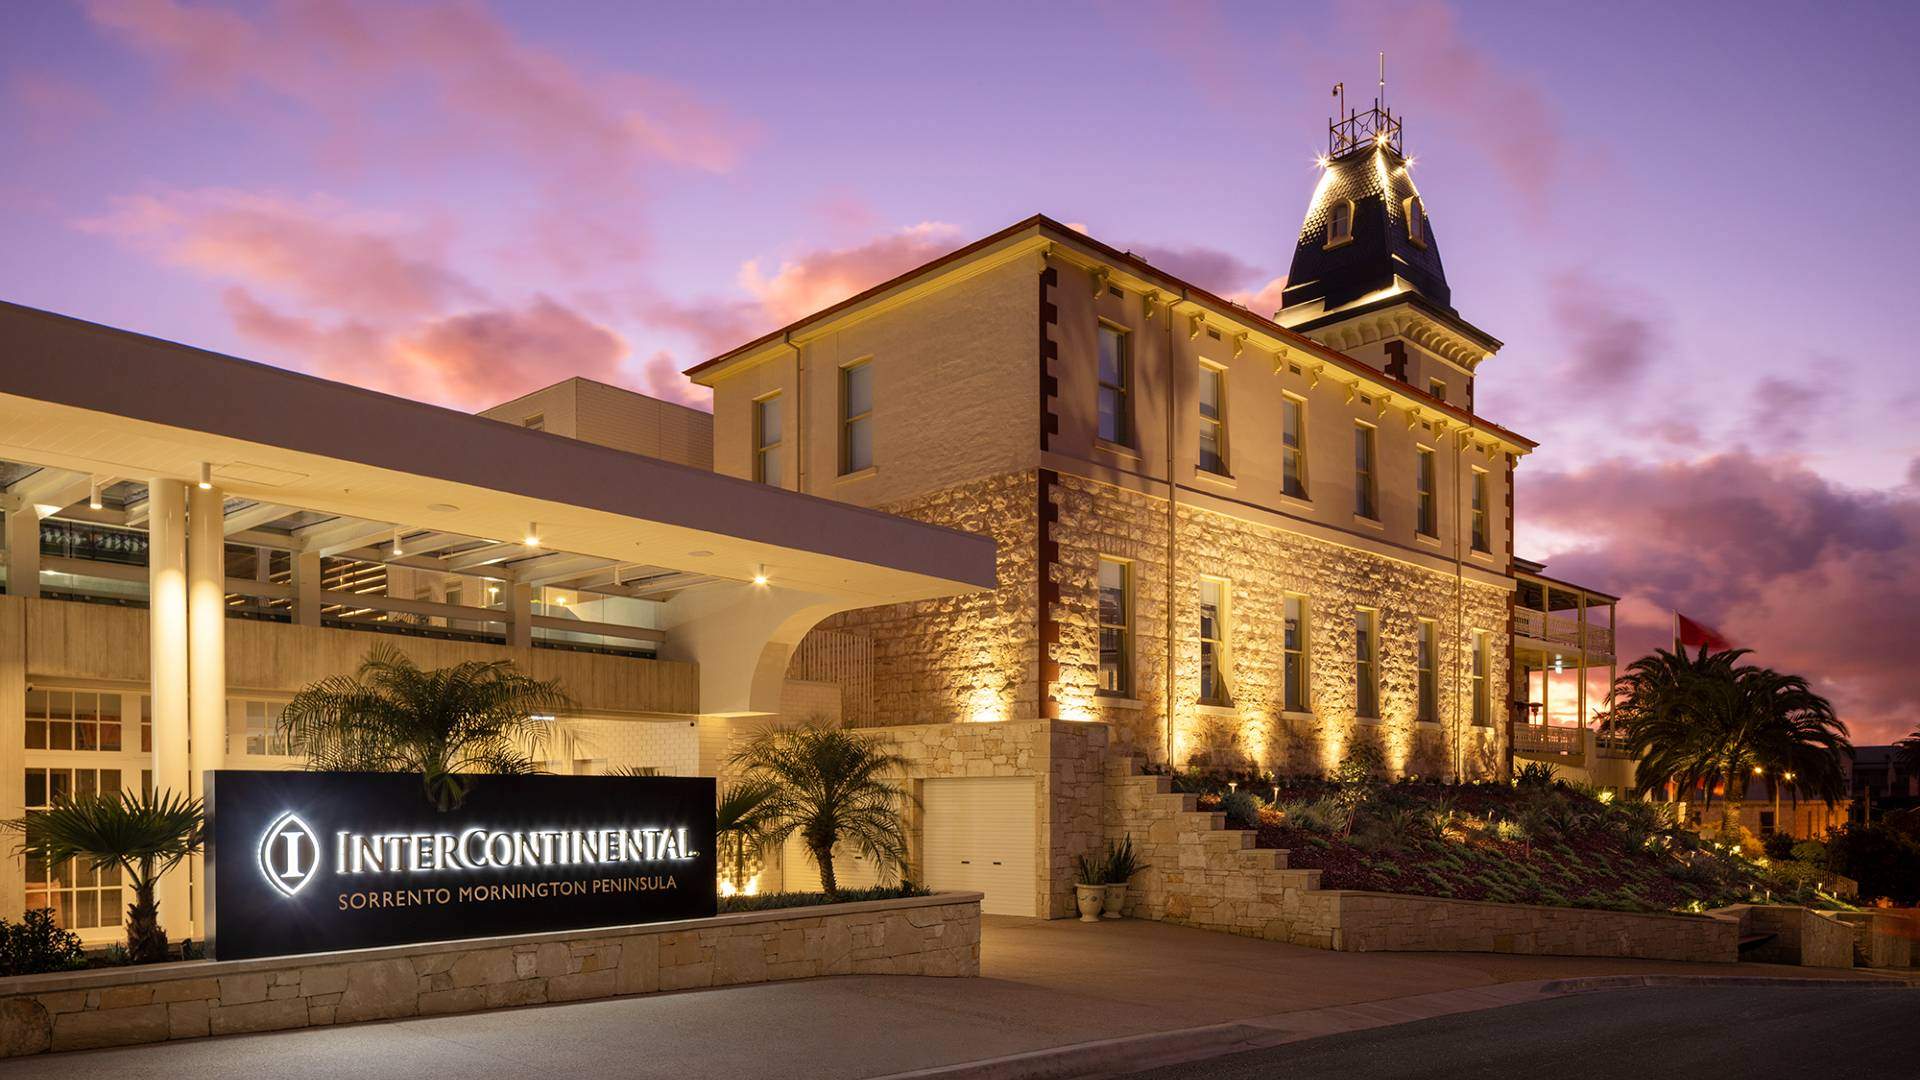 Now Open: Victoria's Mornington Peninsula Has Scored a Luxe New Seaside InterContinental Hotel